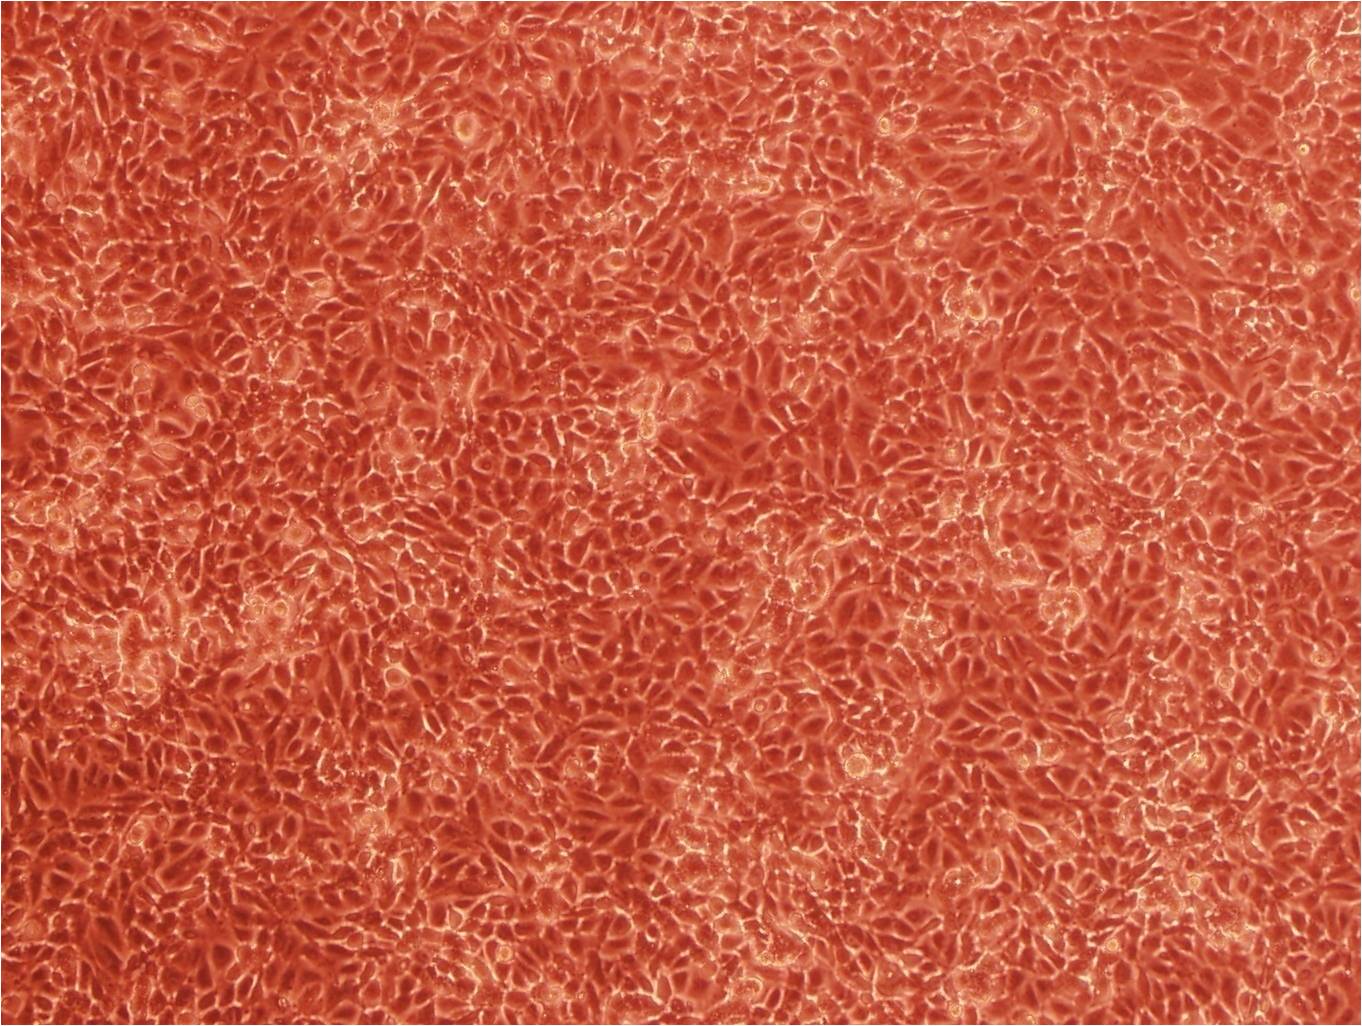 EJ-1 Cell|人膀胱癌细胞